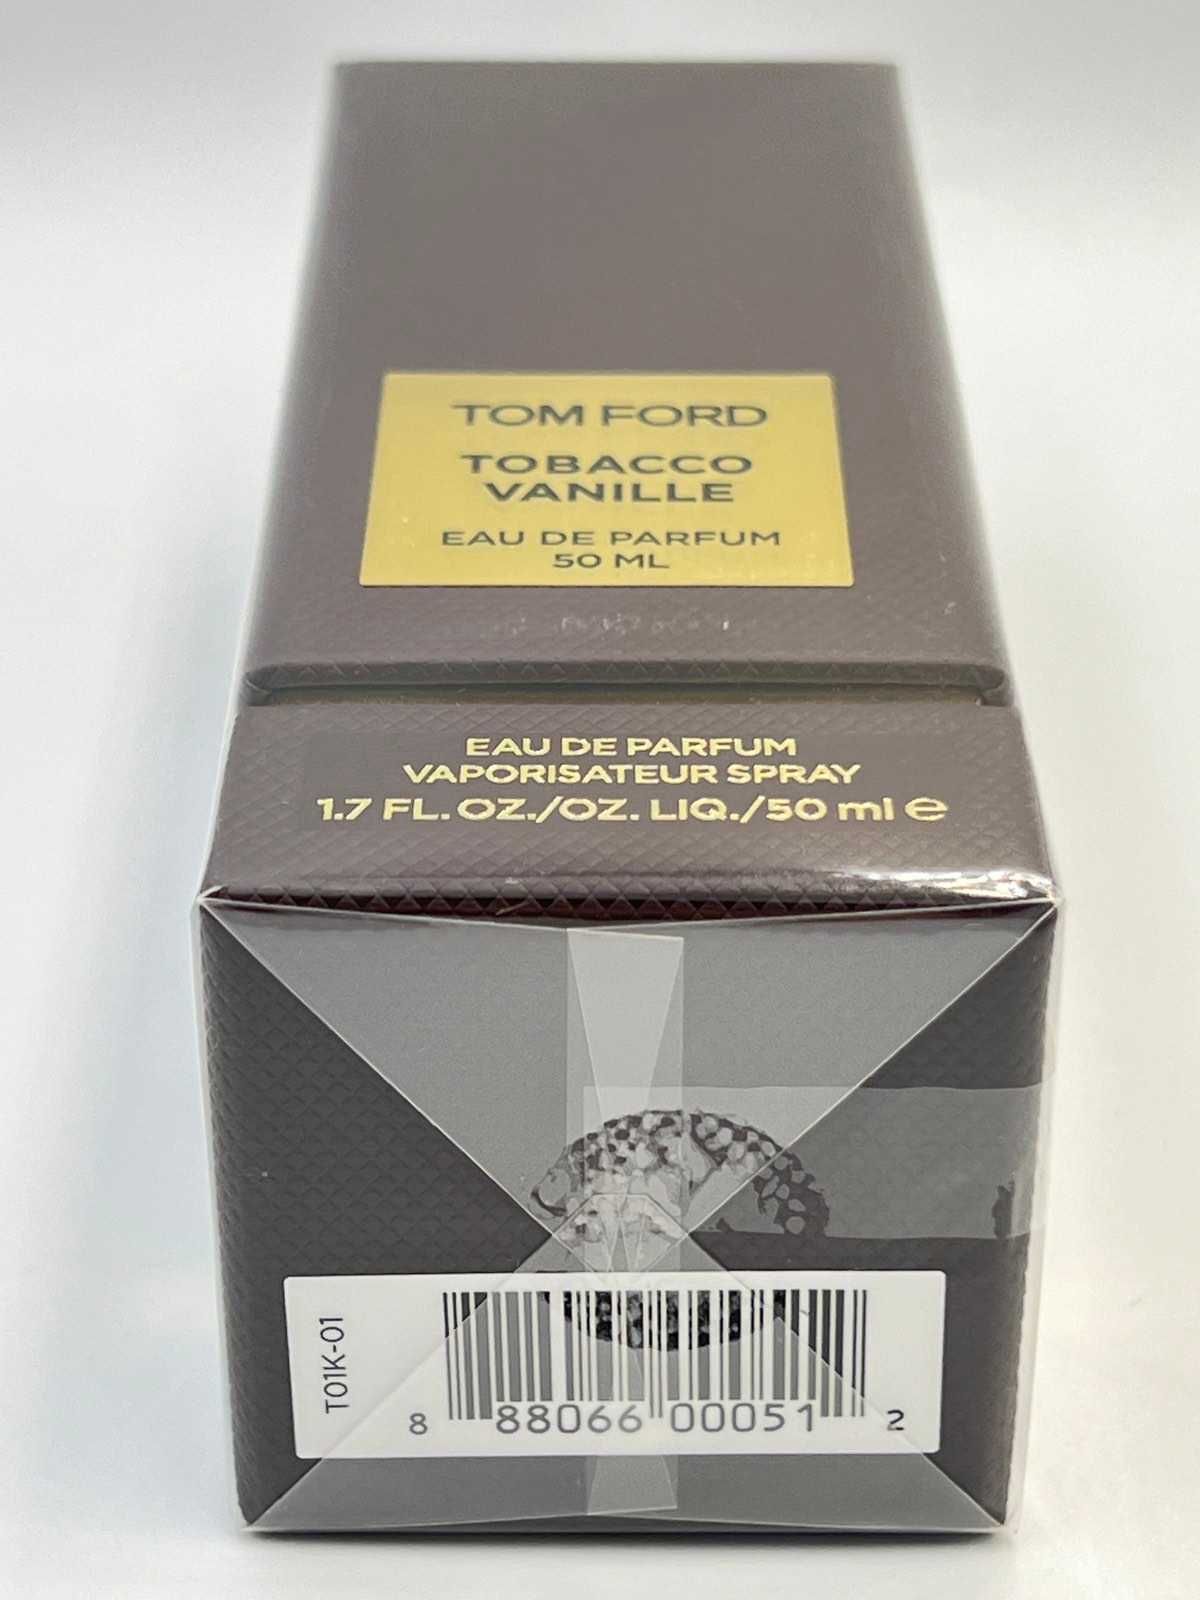 Tom Ford Tobacco Vanille edp 50 мл Оригинал